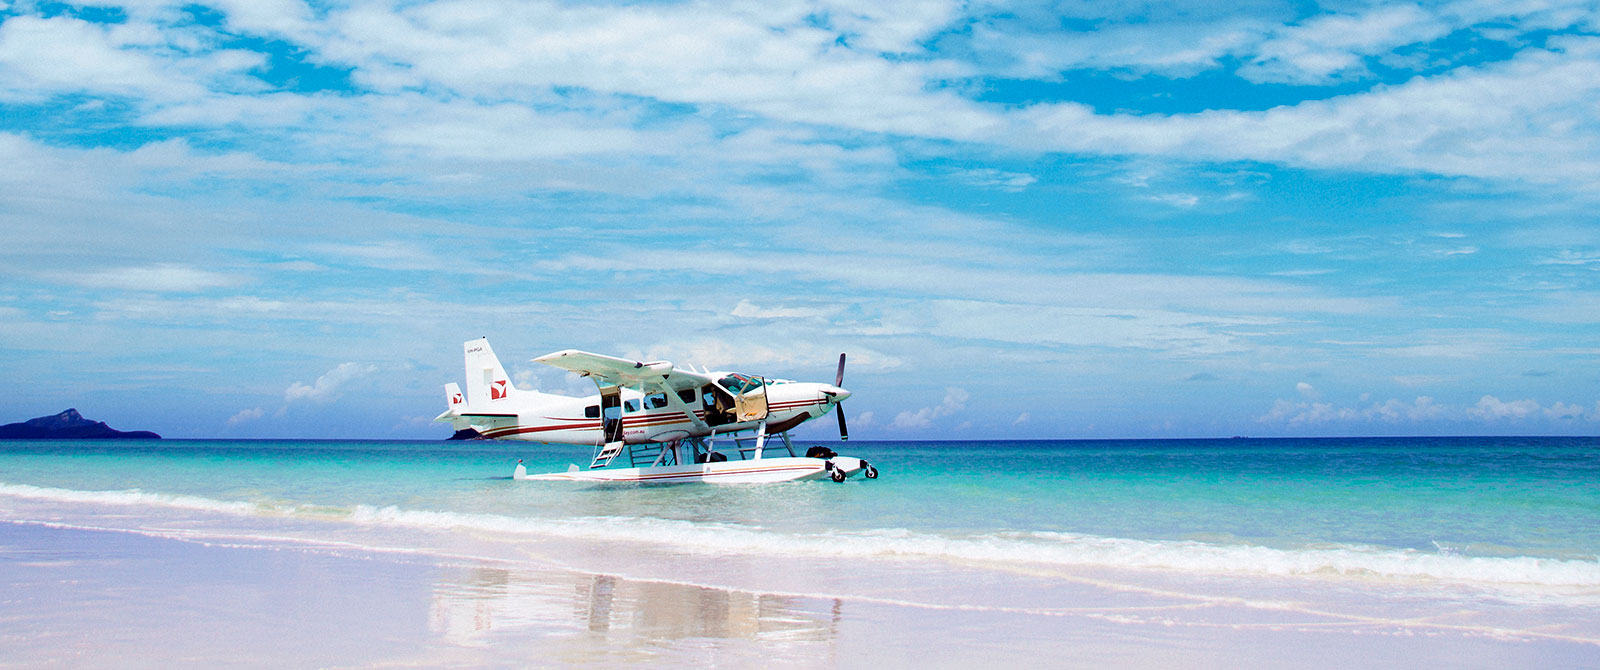 Seaplane Landing on Whitehaven Beach, Great Barrier Reef, Australia